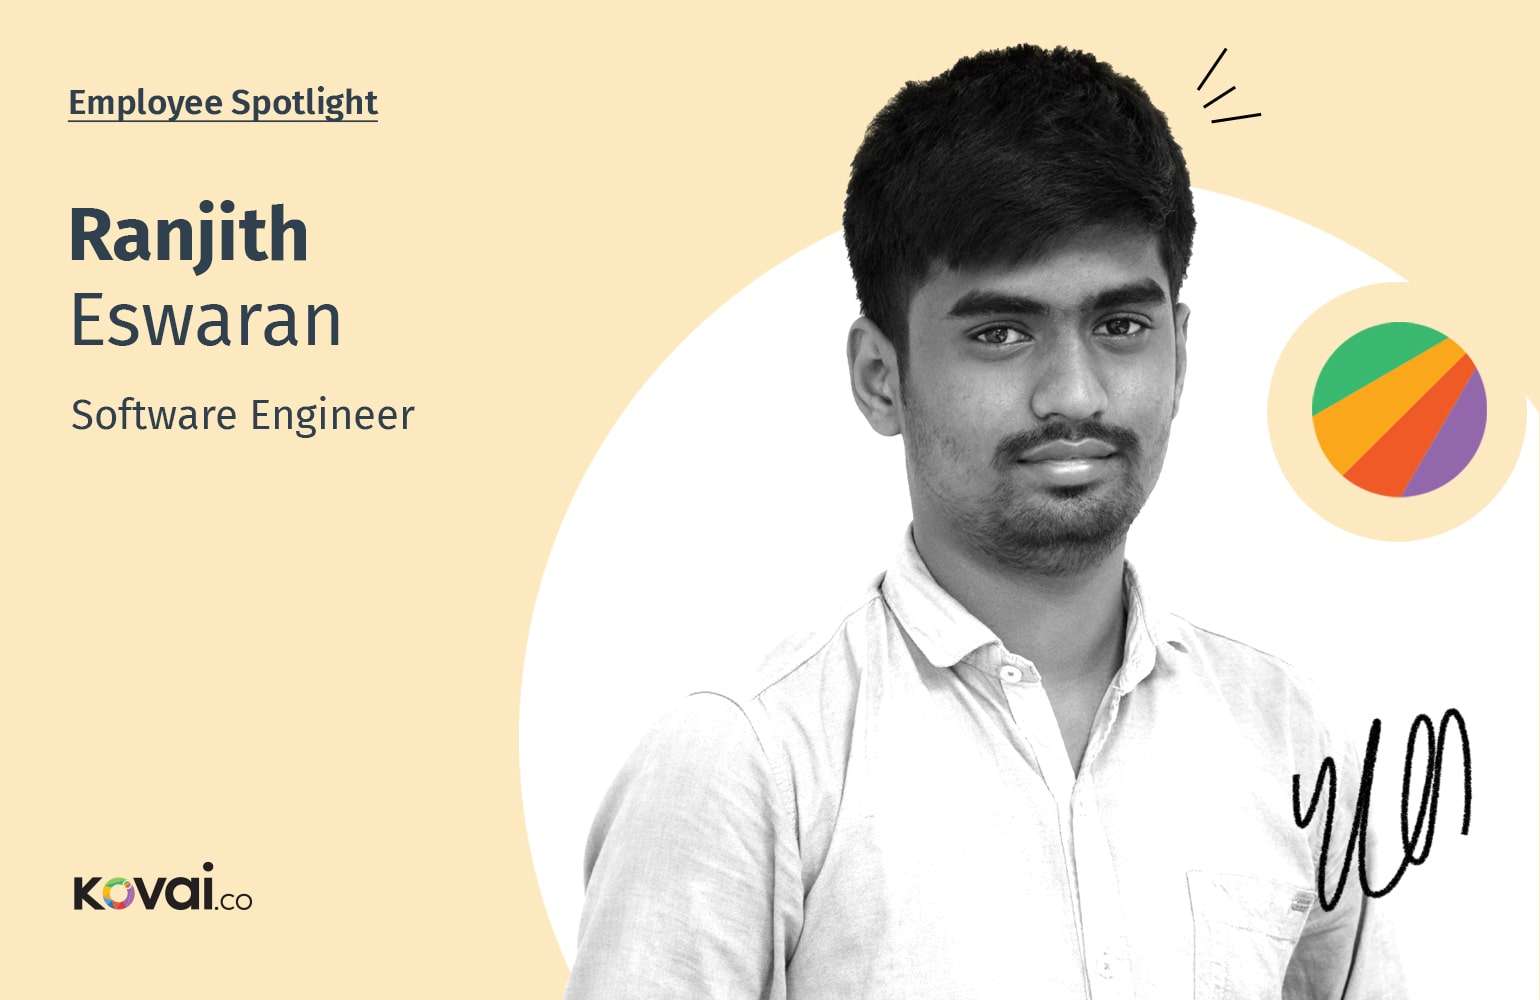 Ranjith Eswaran: Employee Spotlight